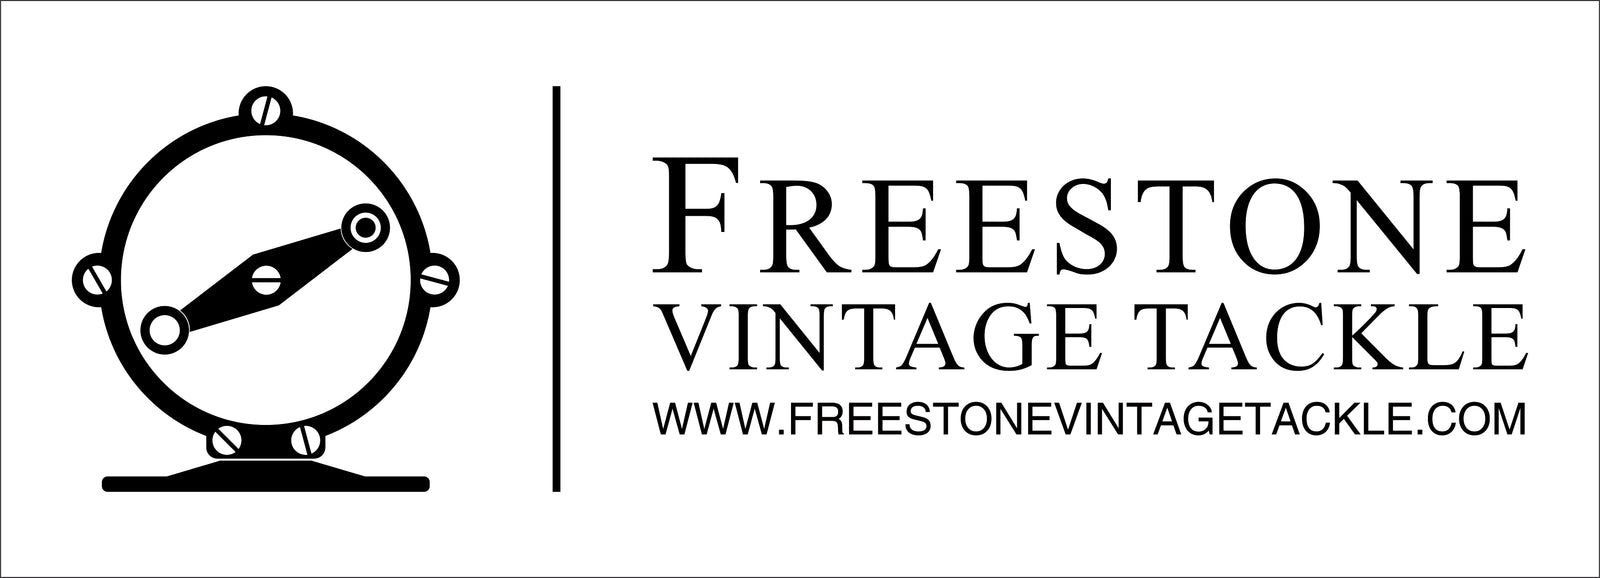 Latest Offerings - Freestone Vintage Tackle